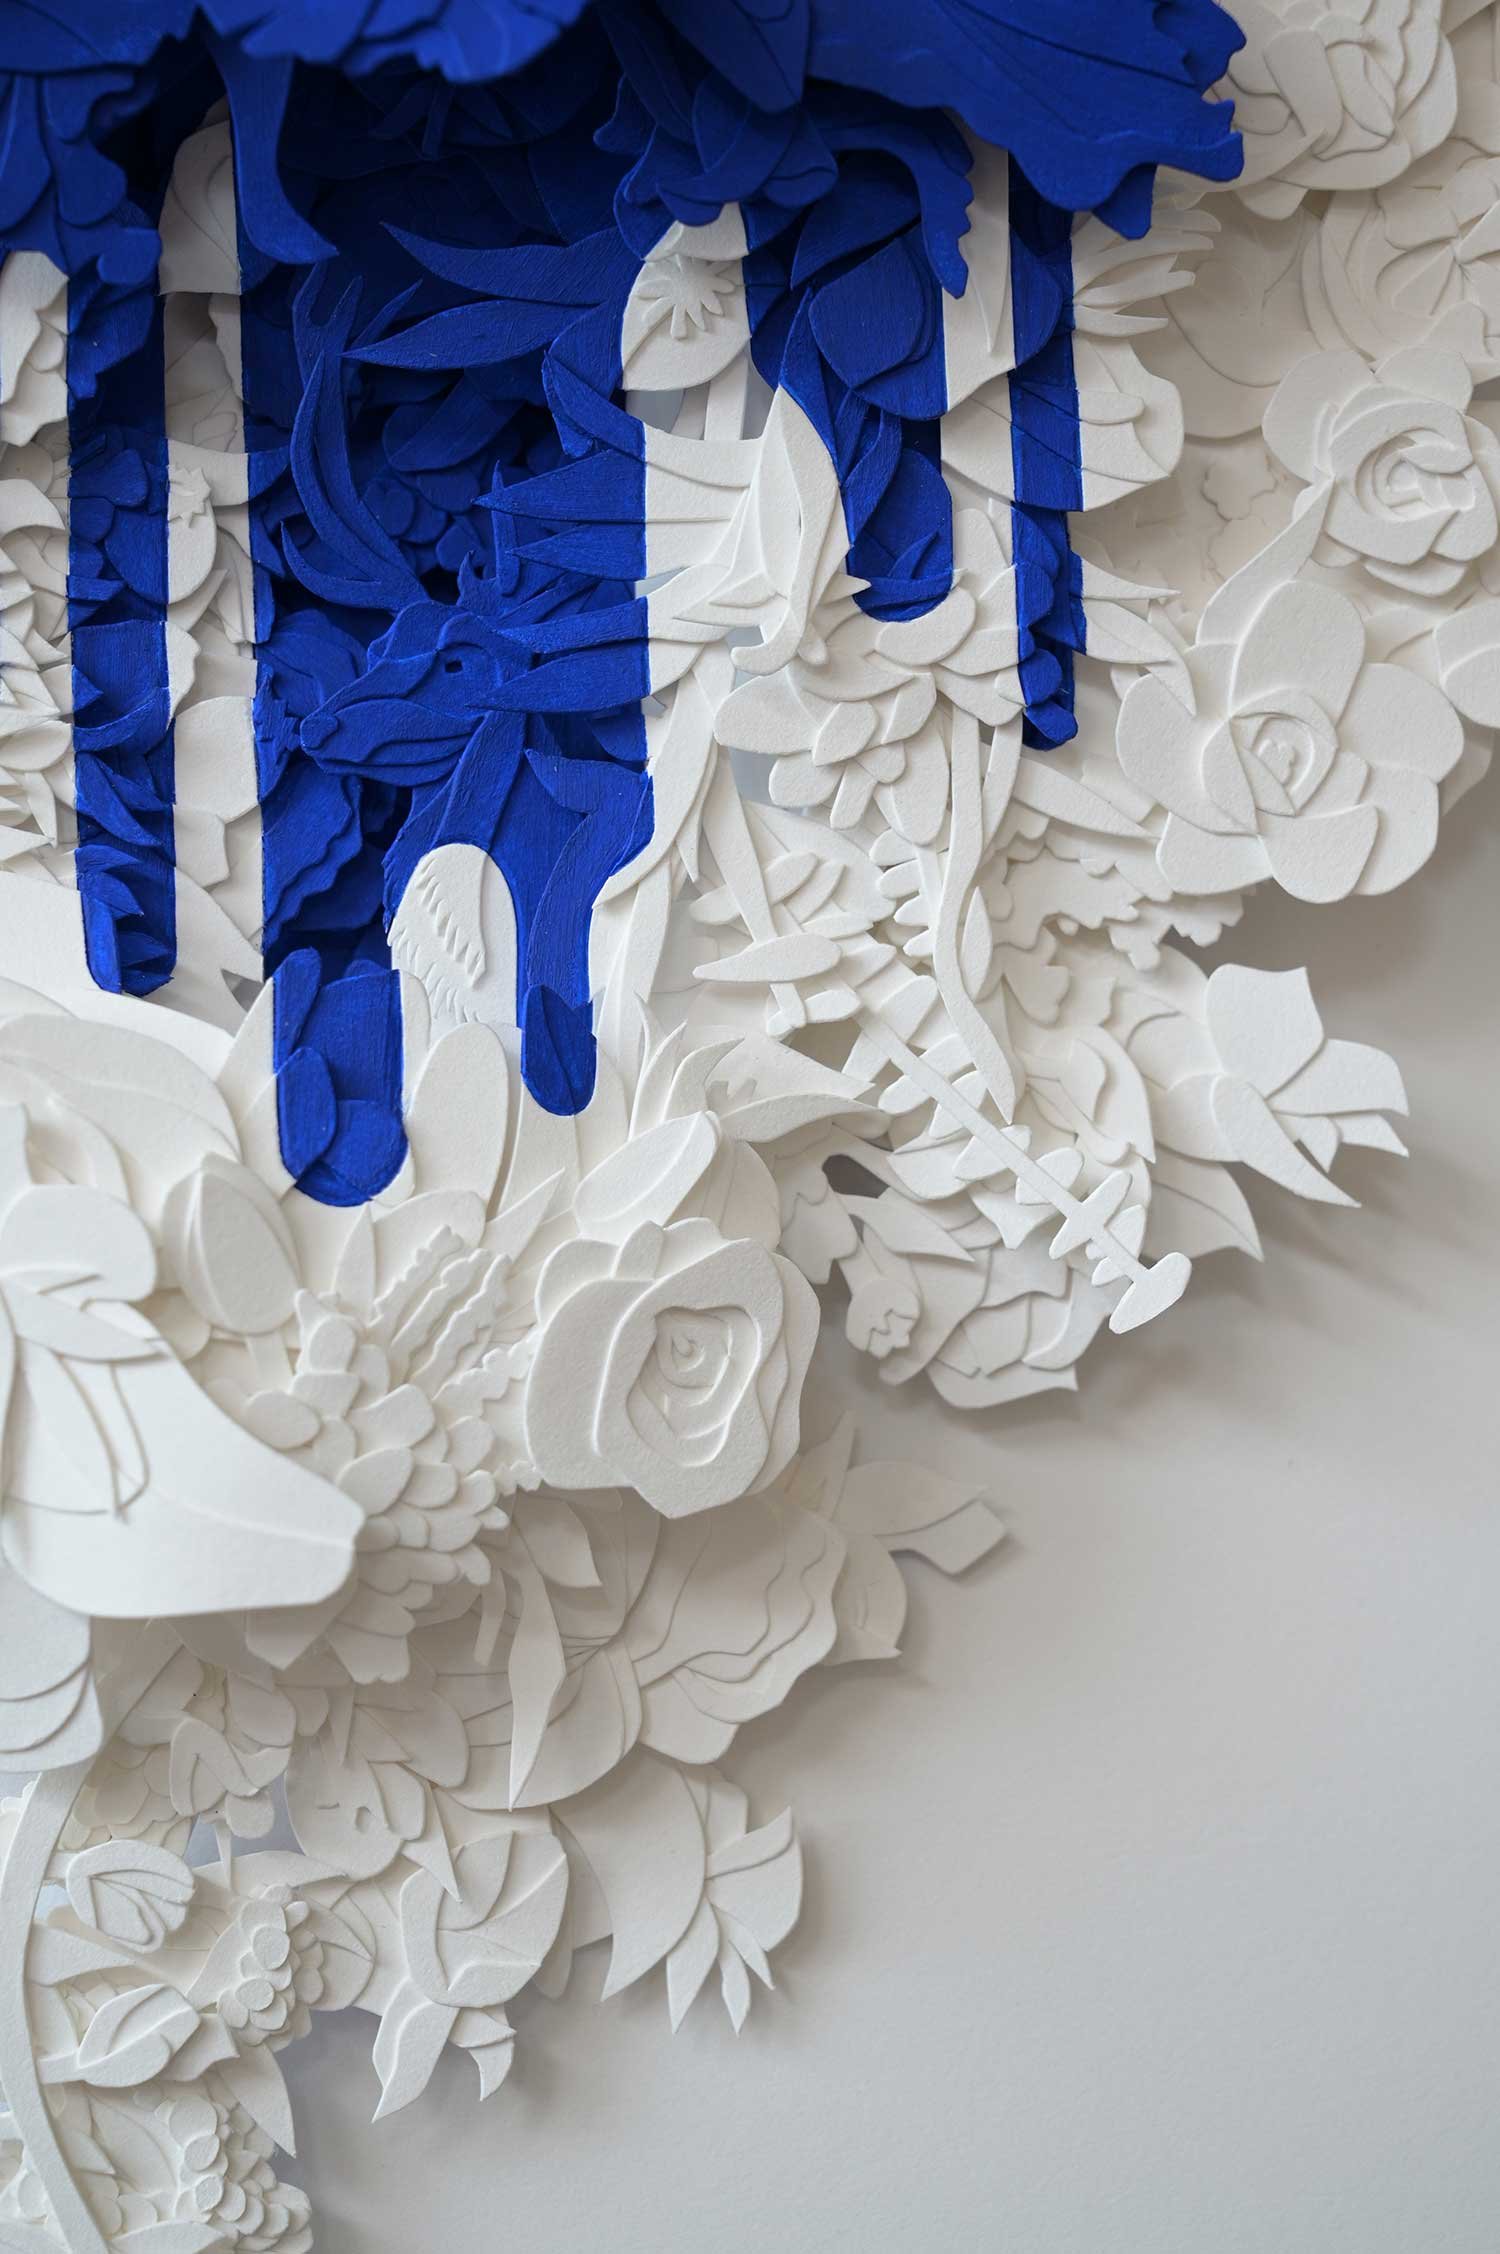 joey-bates-paper-art-sculpture-commission-3-detail2.jpg